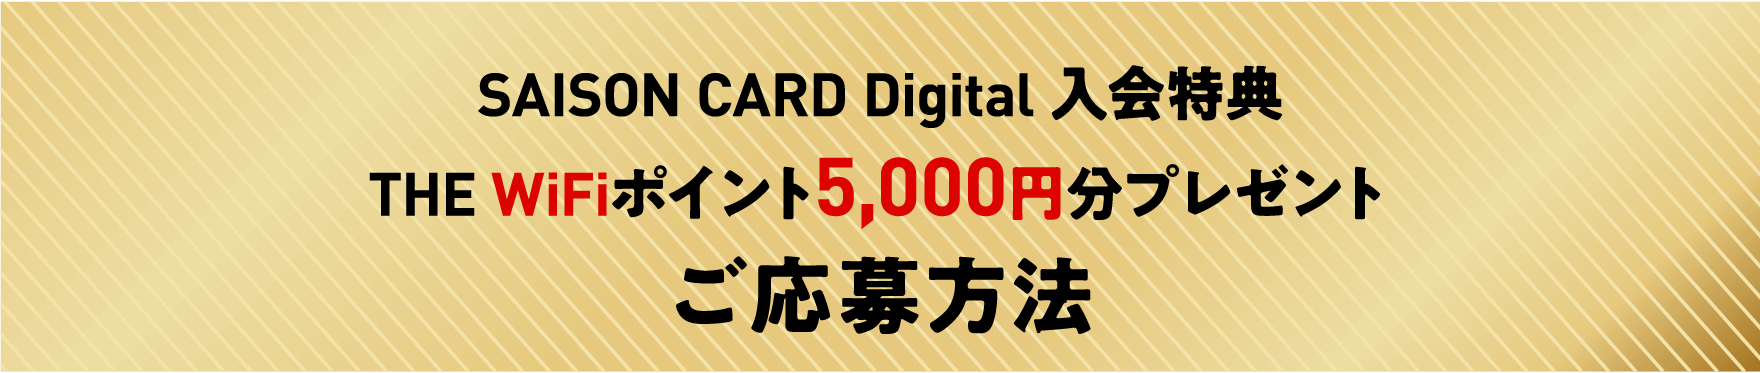 THE WiFiポイント 5,000円分プレゼント ご応募方法